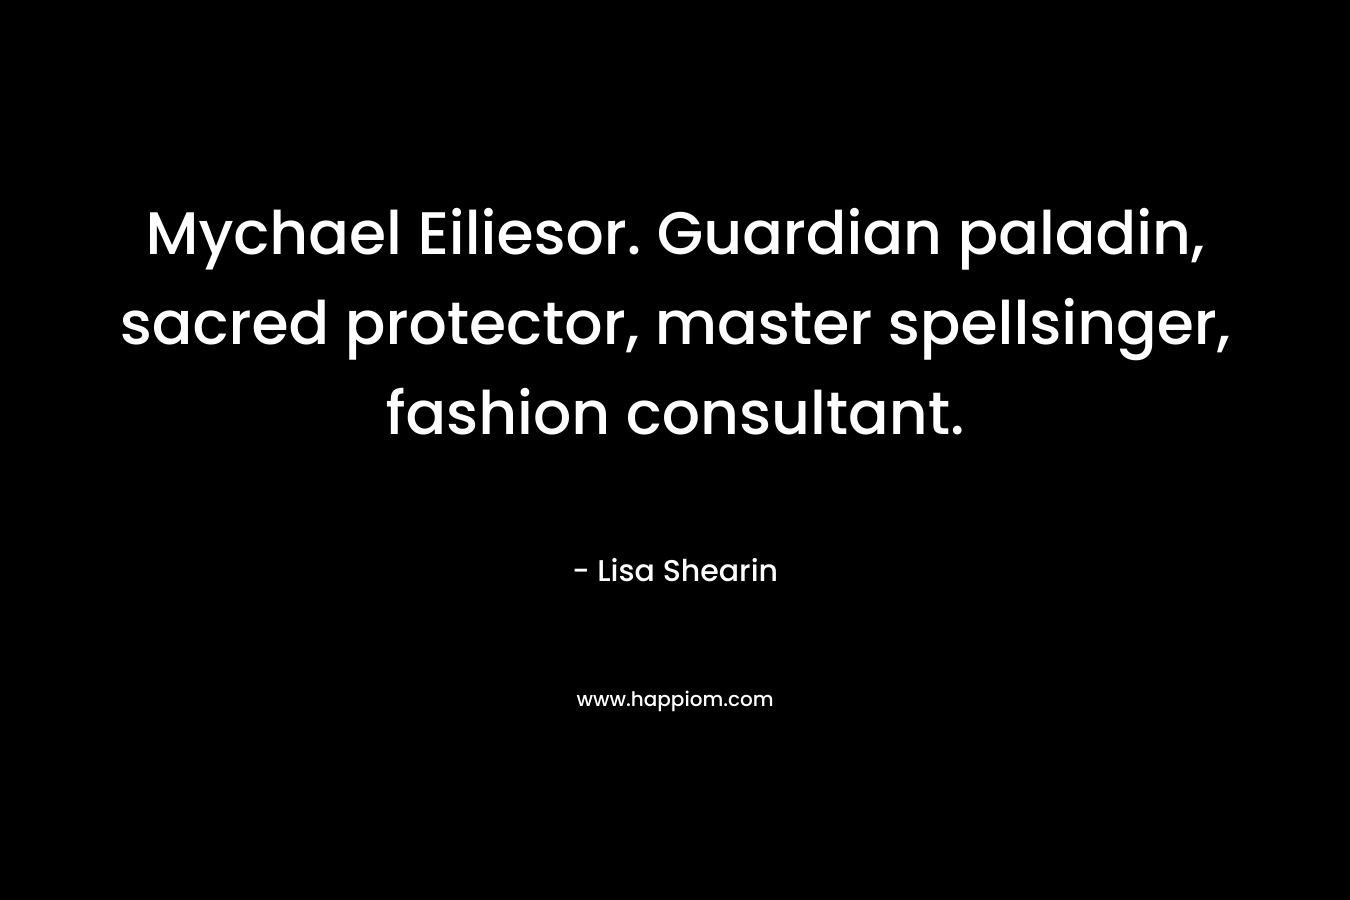 Mychael Eiliesor. Guardian paladin, sacred protector, master spellsinger, fashion consultant. – Lisa Shearin